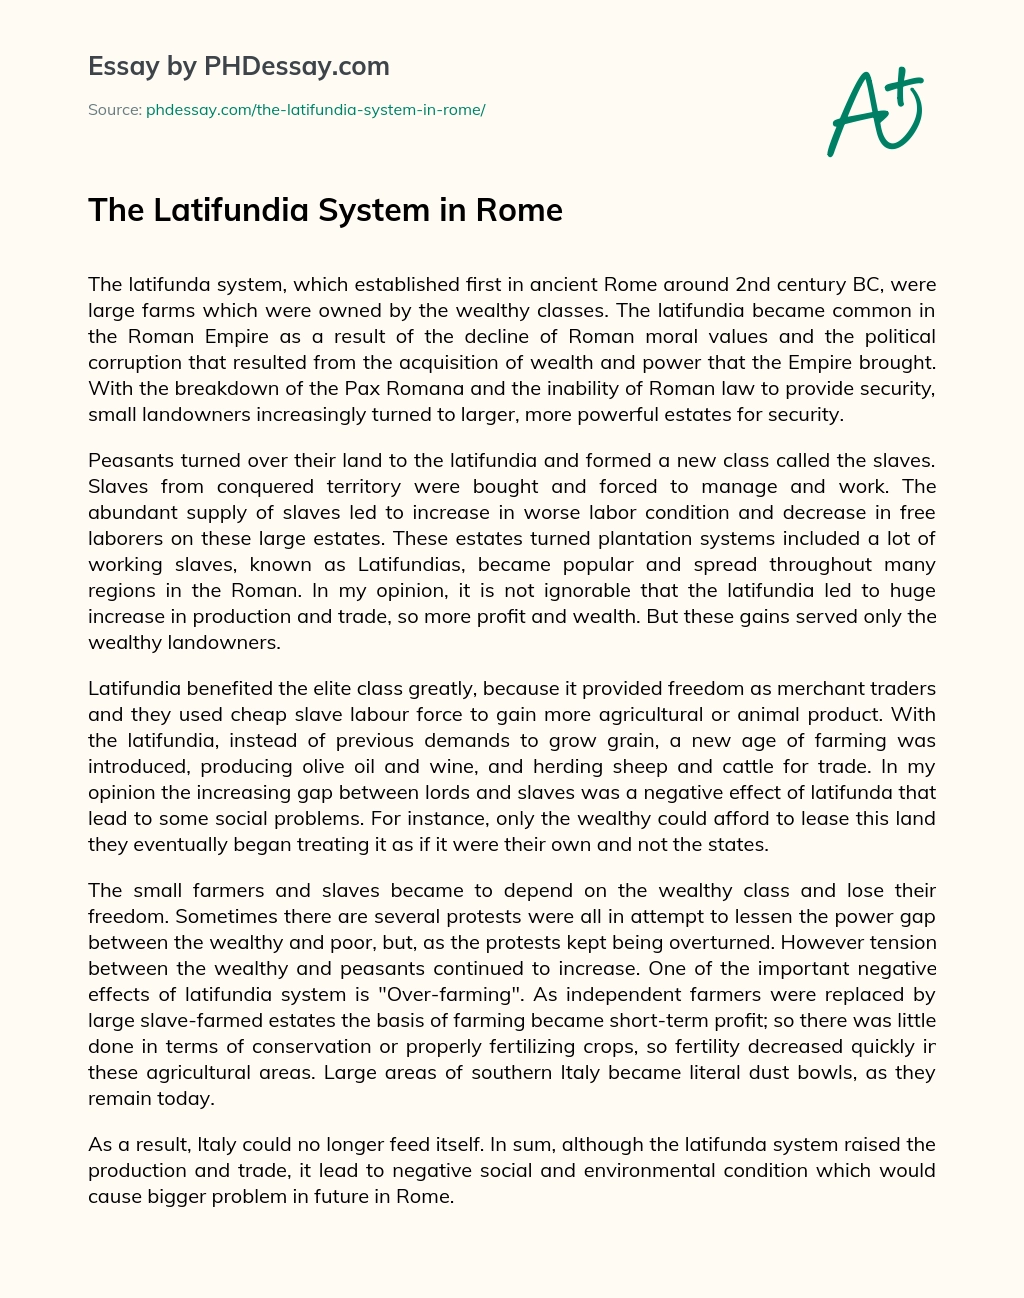 The Latifundia System in Rome essay